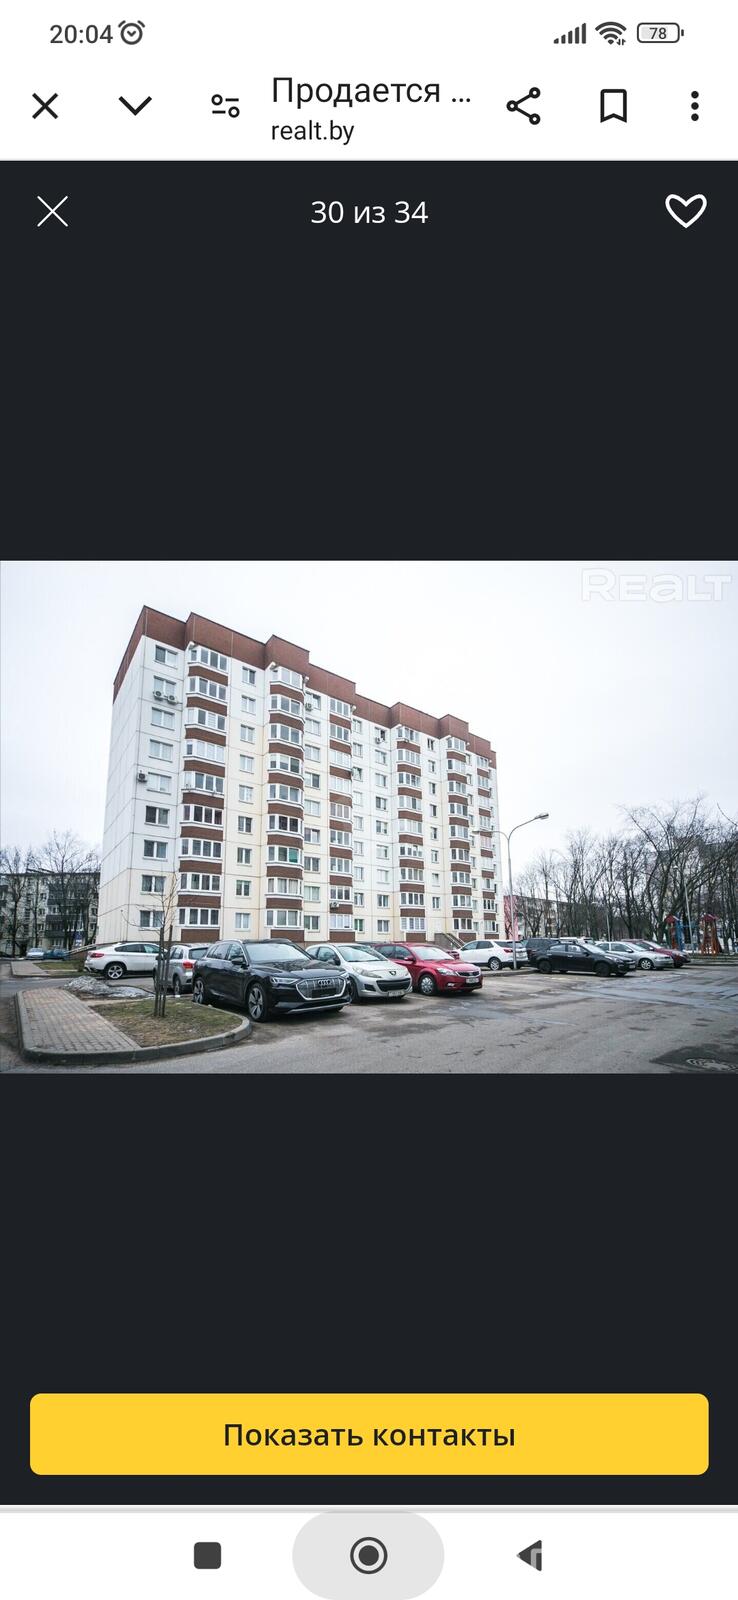 квартира, Минск, ул. Фроликова, д. 31, стоимость продажи 278 365 р.